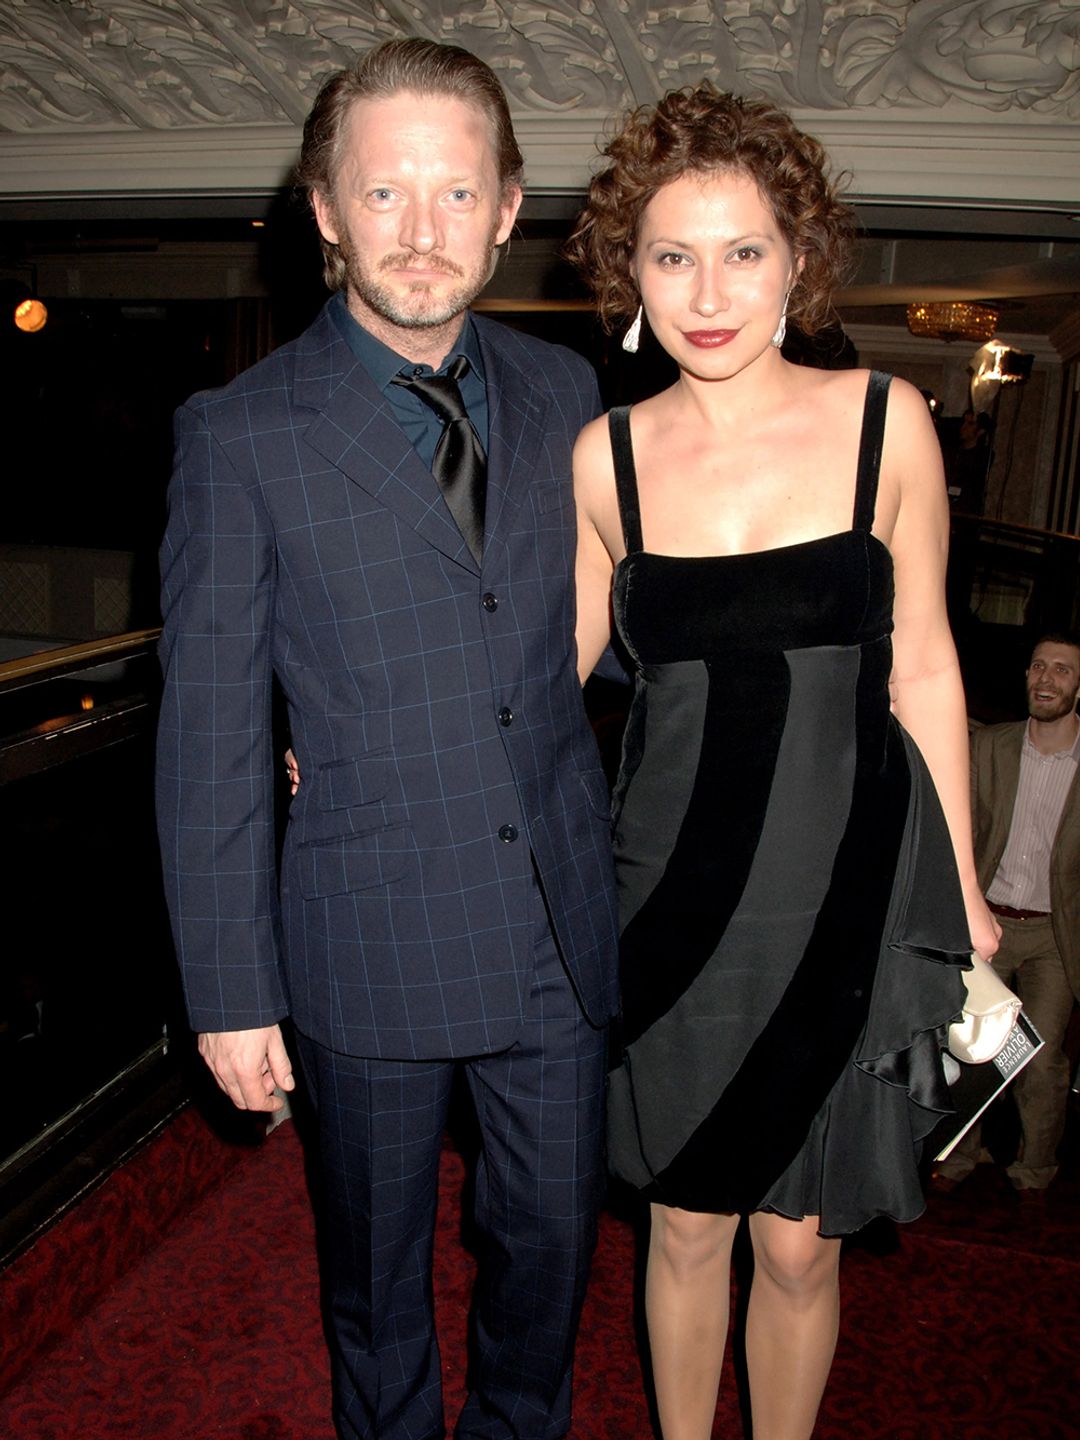 Douglas Henshall and Tena Štivičić at the Laurence Olivier Awards